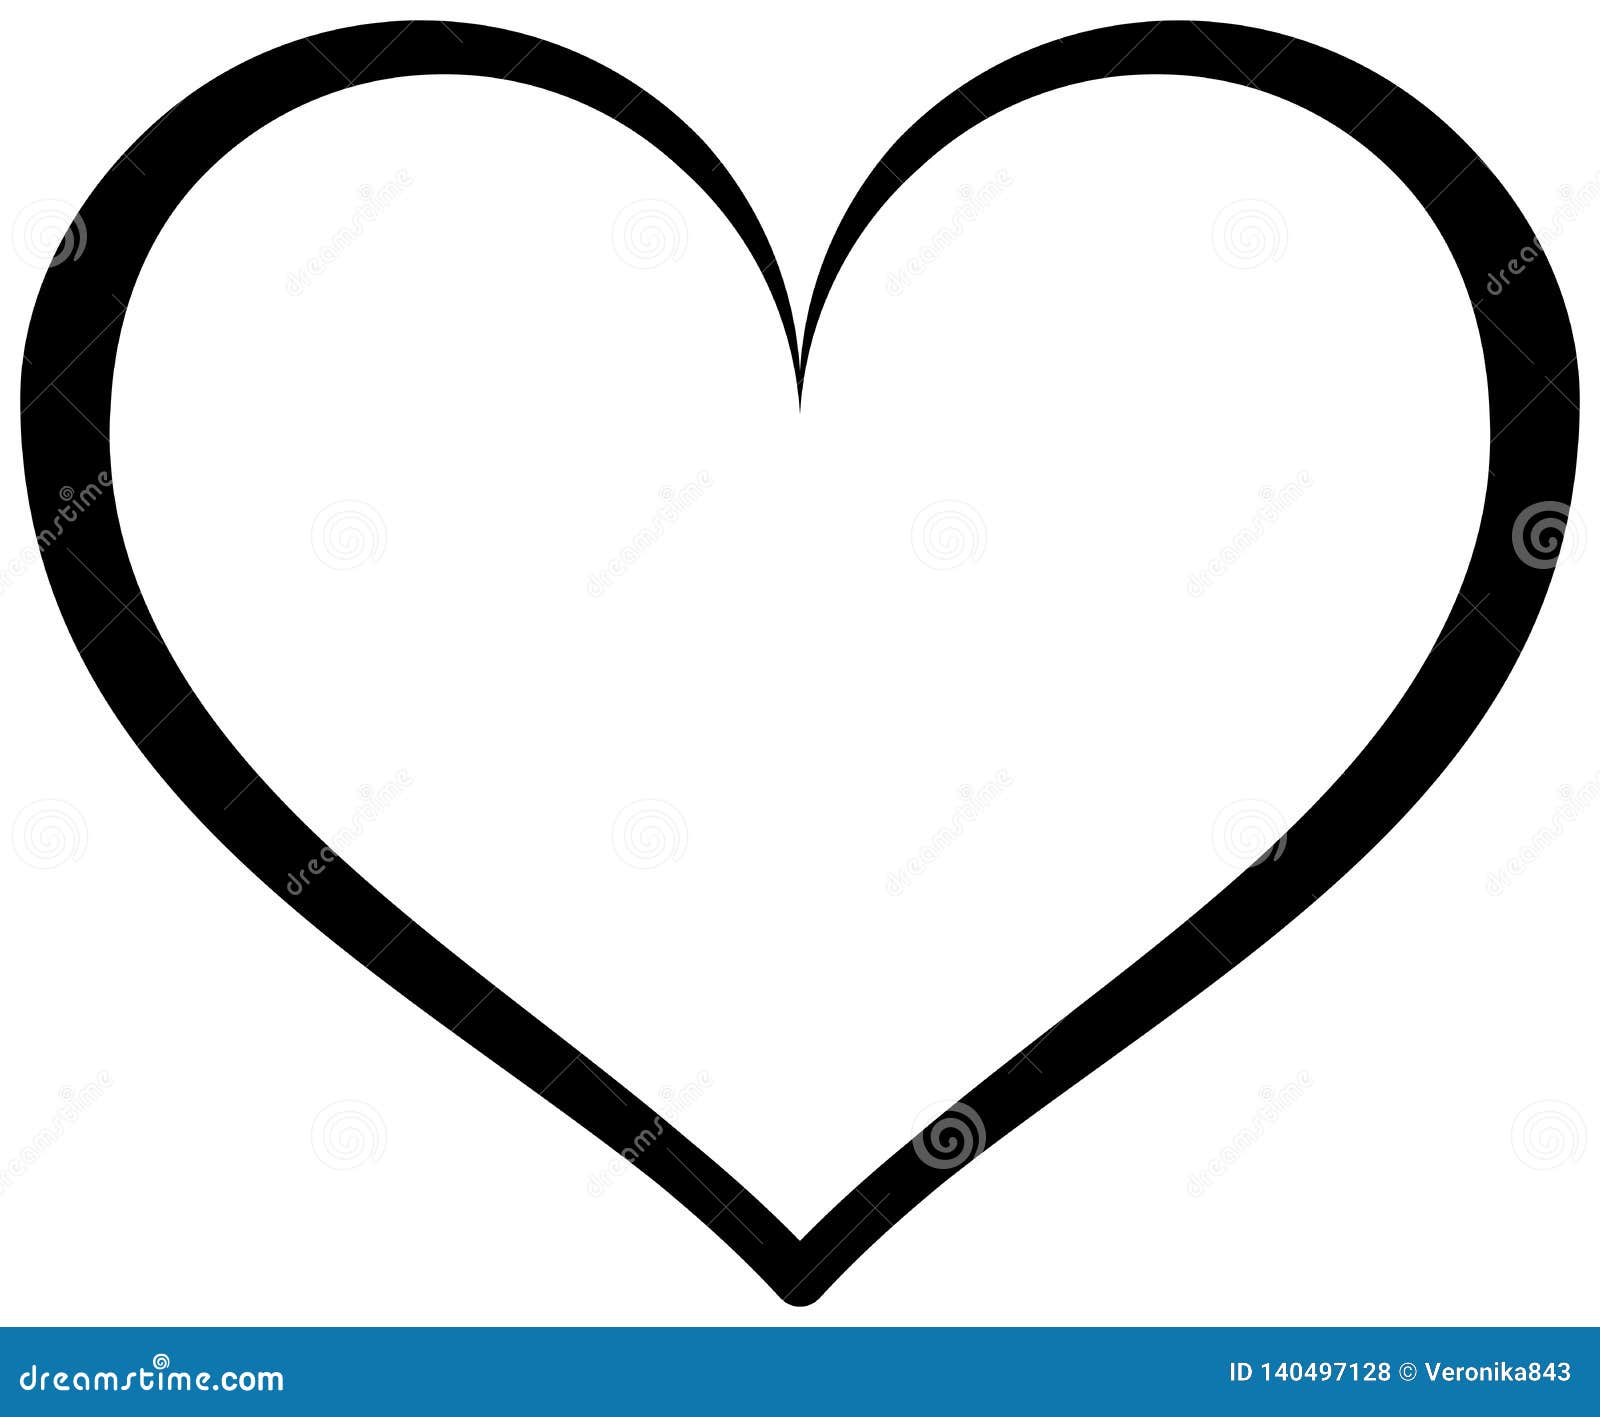 Heart outline images 164076-Heart shape outline images